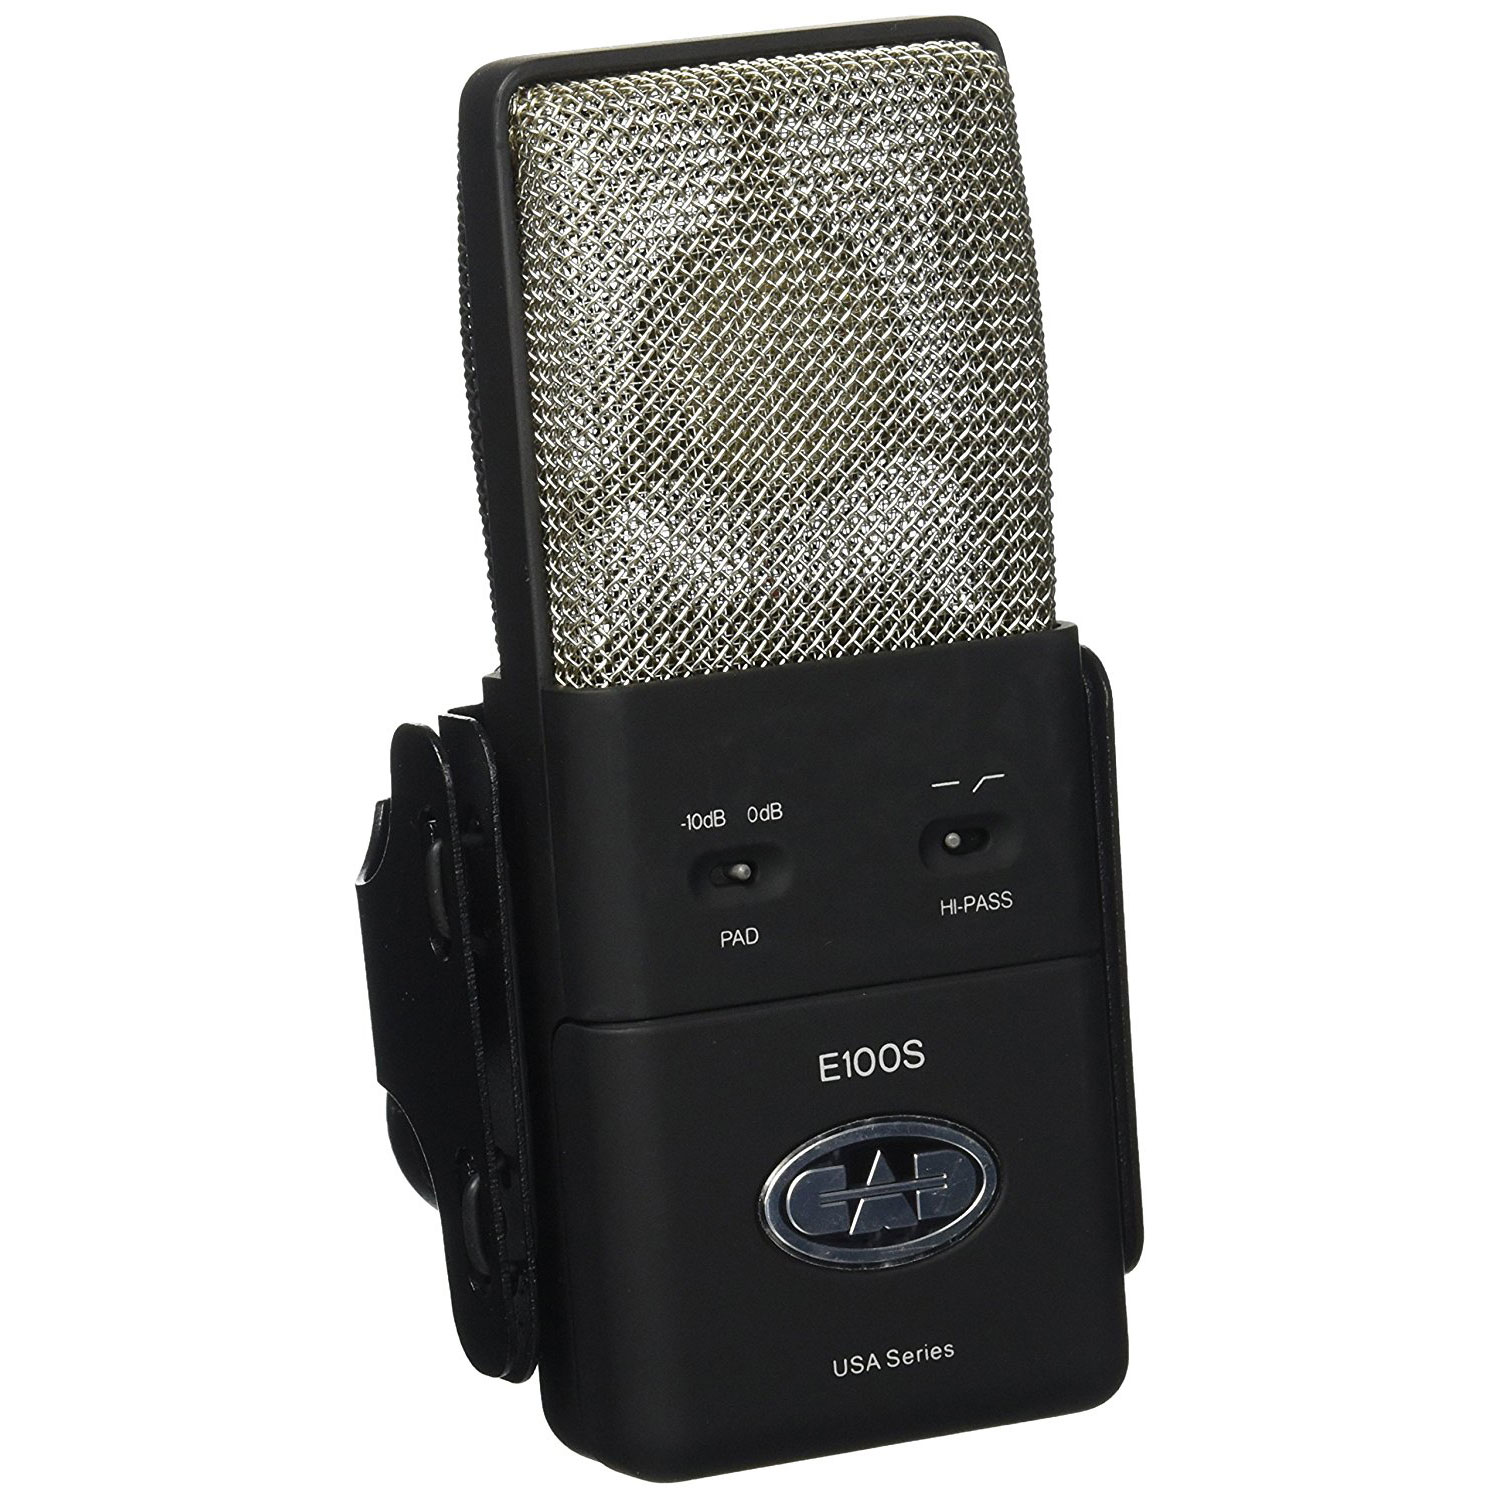 CAD Audio Equitek E100S Supercardioid Condenser Microphone, Black